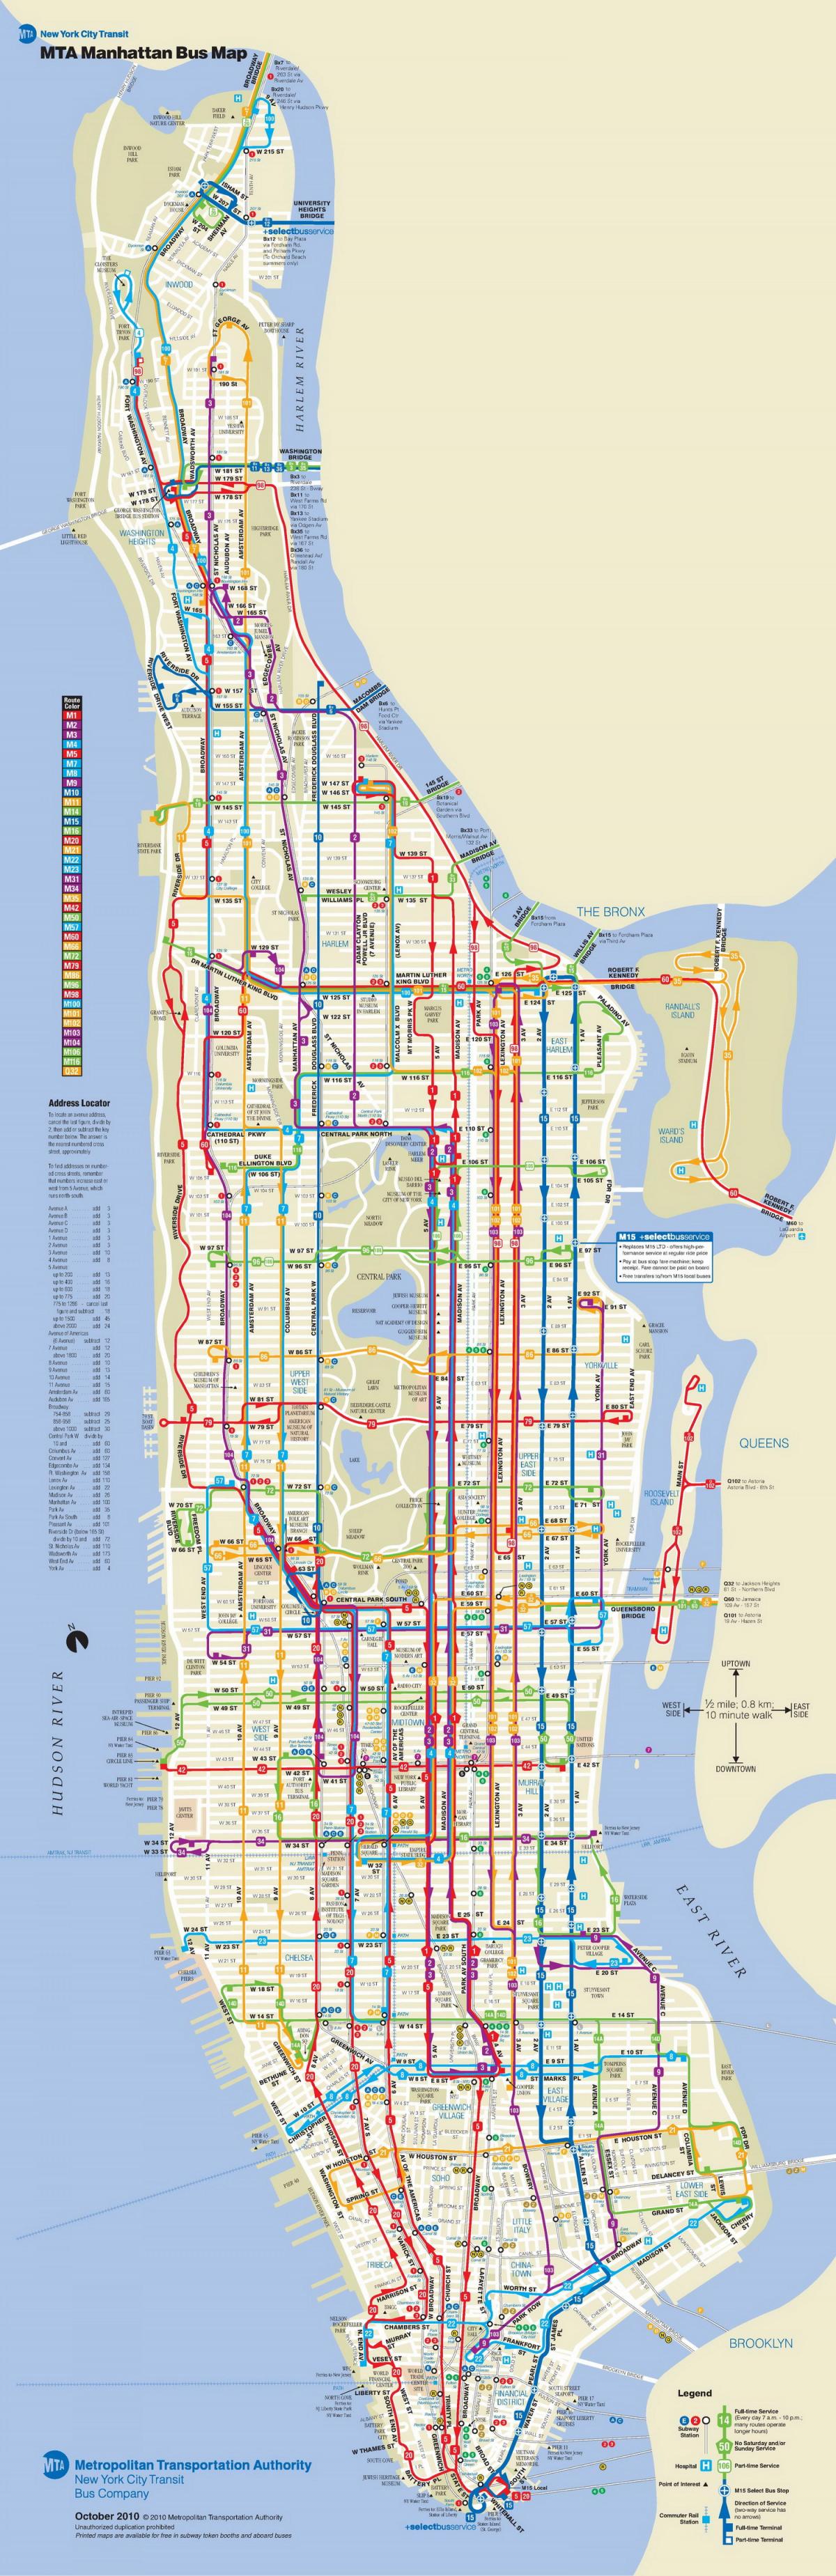 MTA bus mapa manhattanu